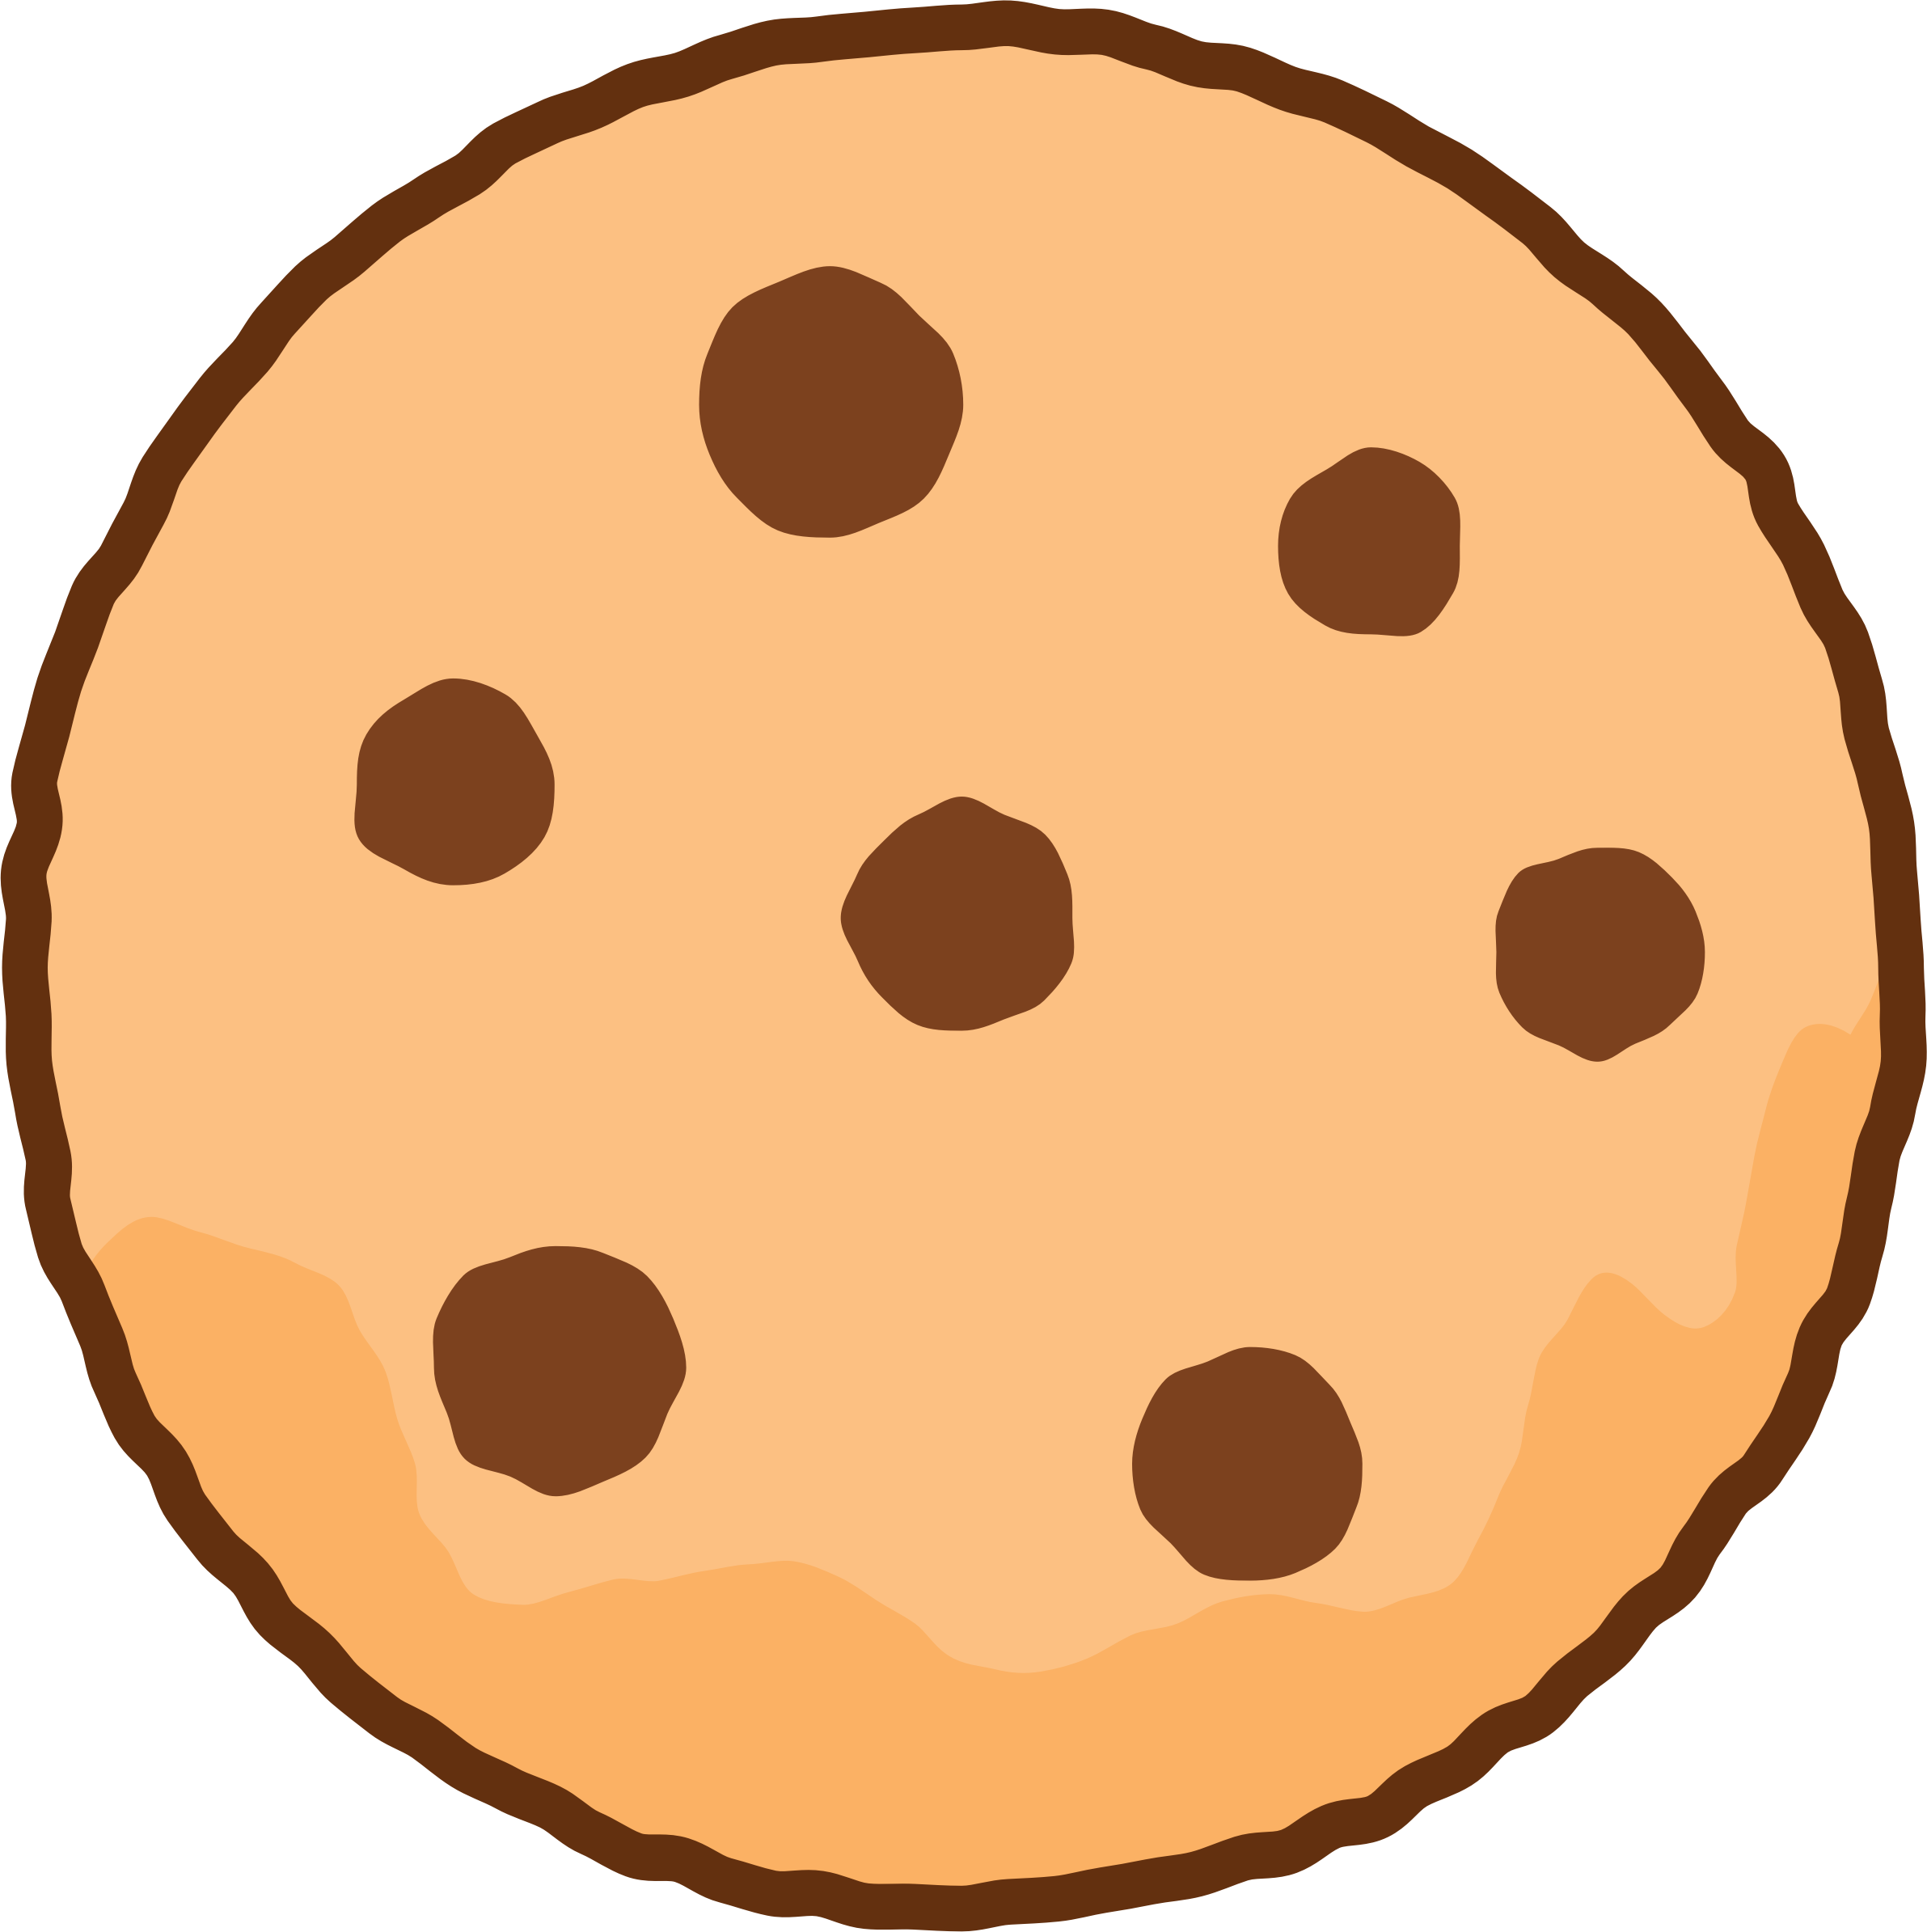 Big image png. Clipart food cookie